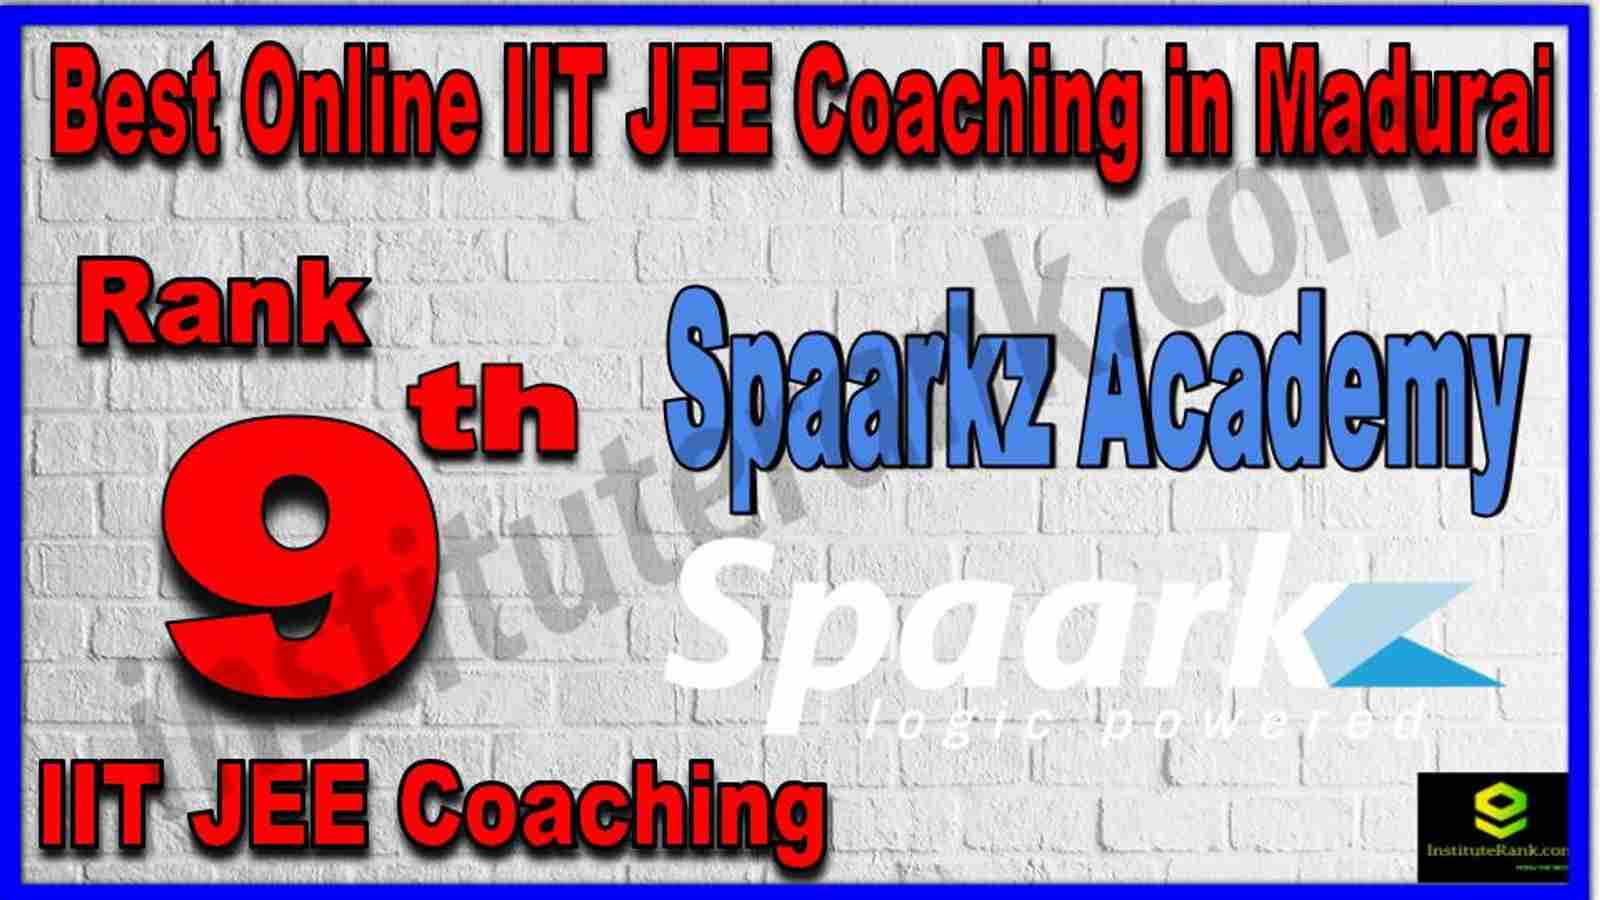 Rank 9th Best Online IIT JEE Coaching in Madurai